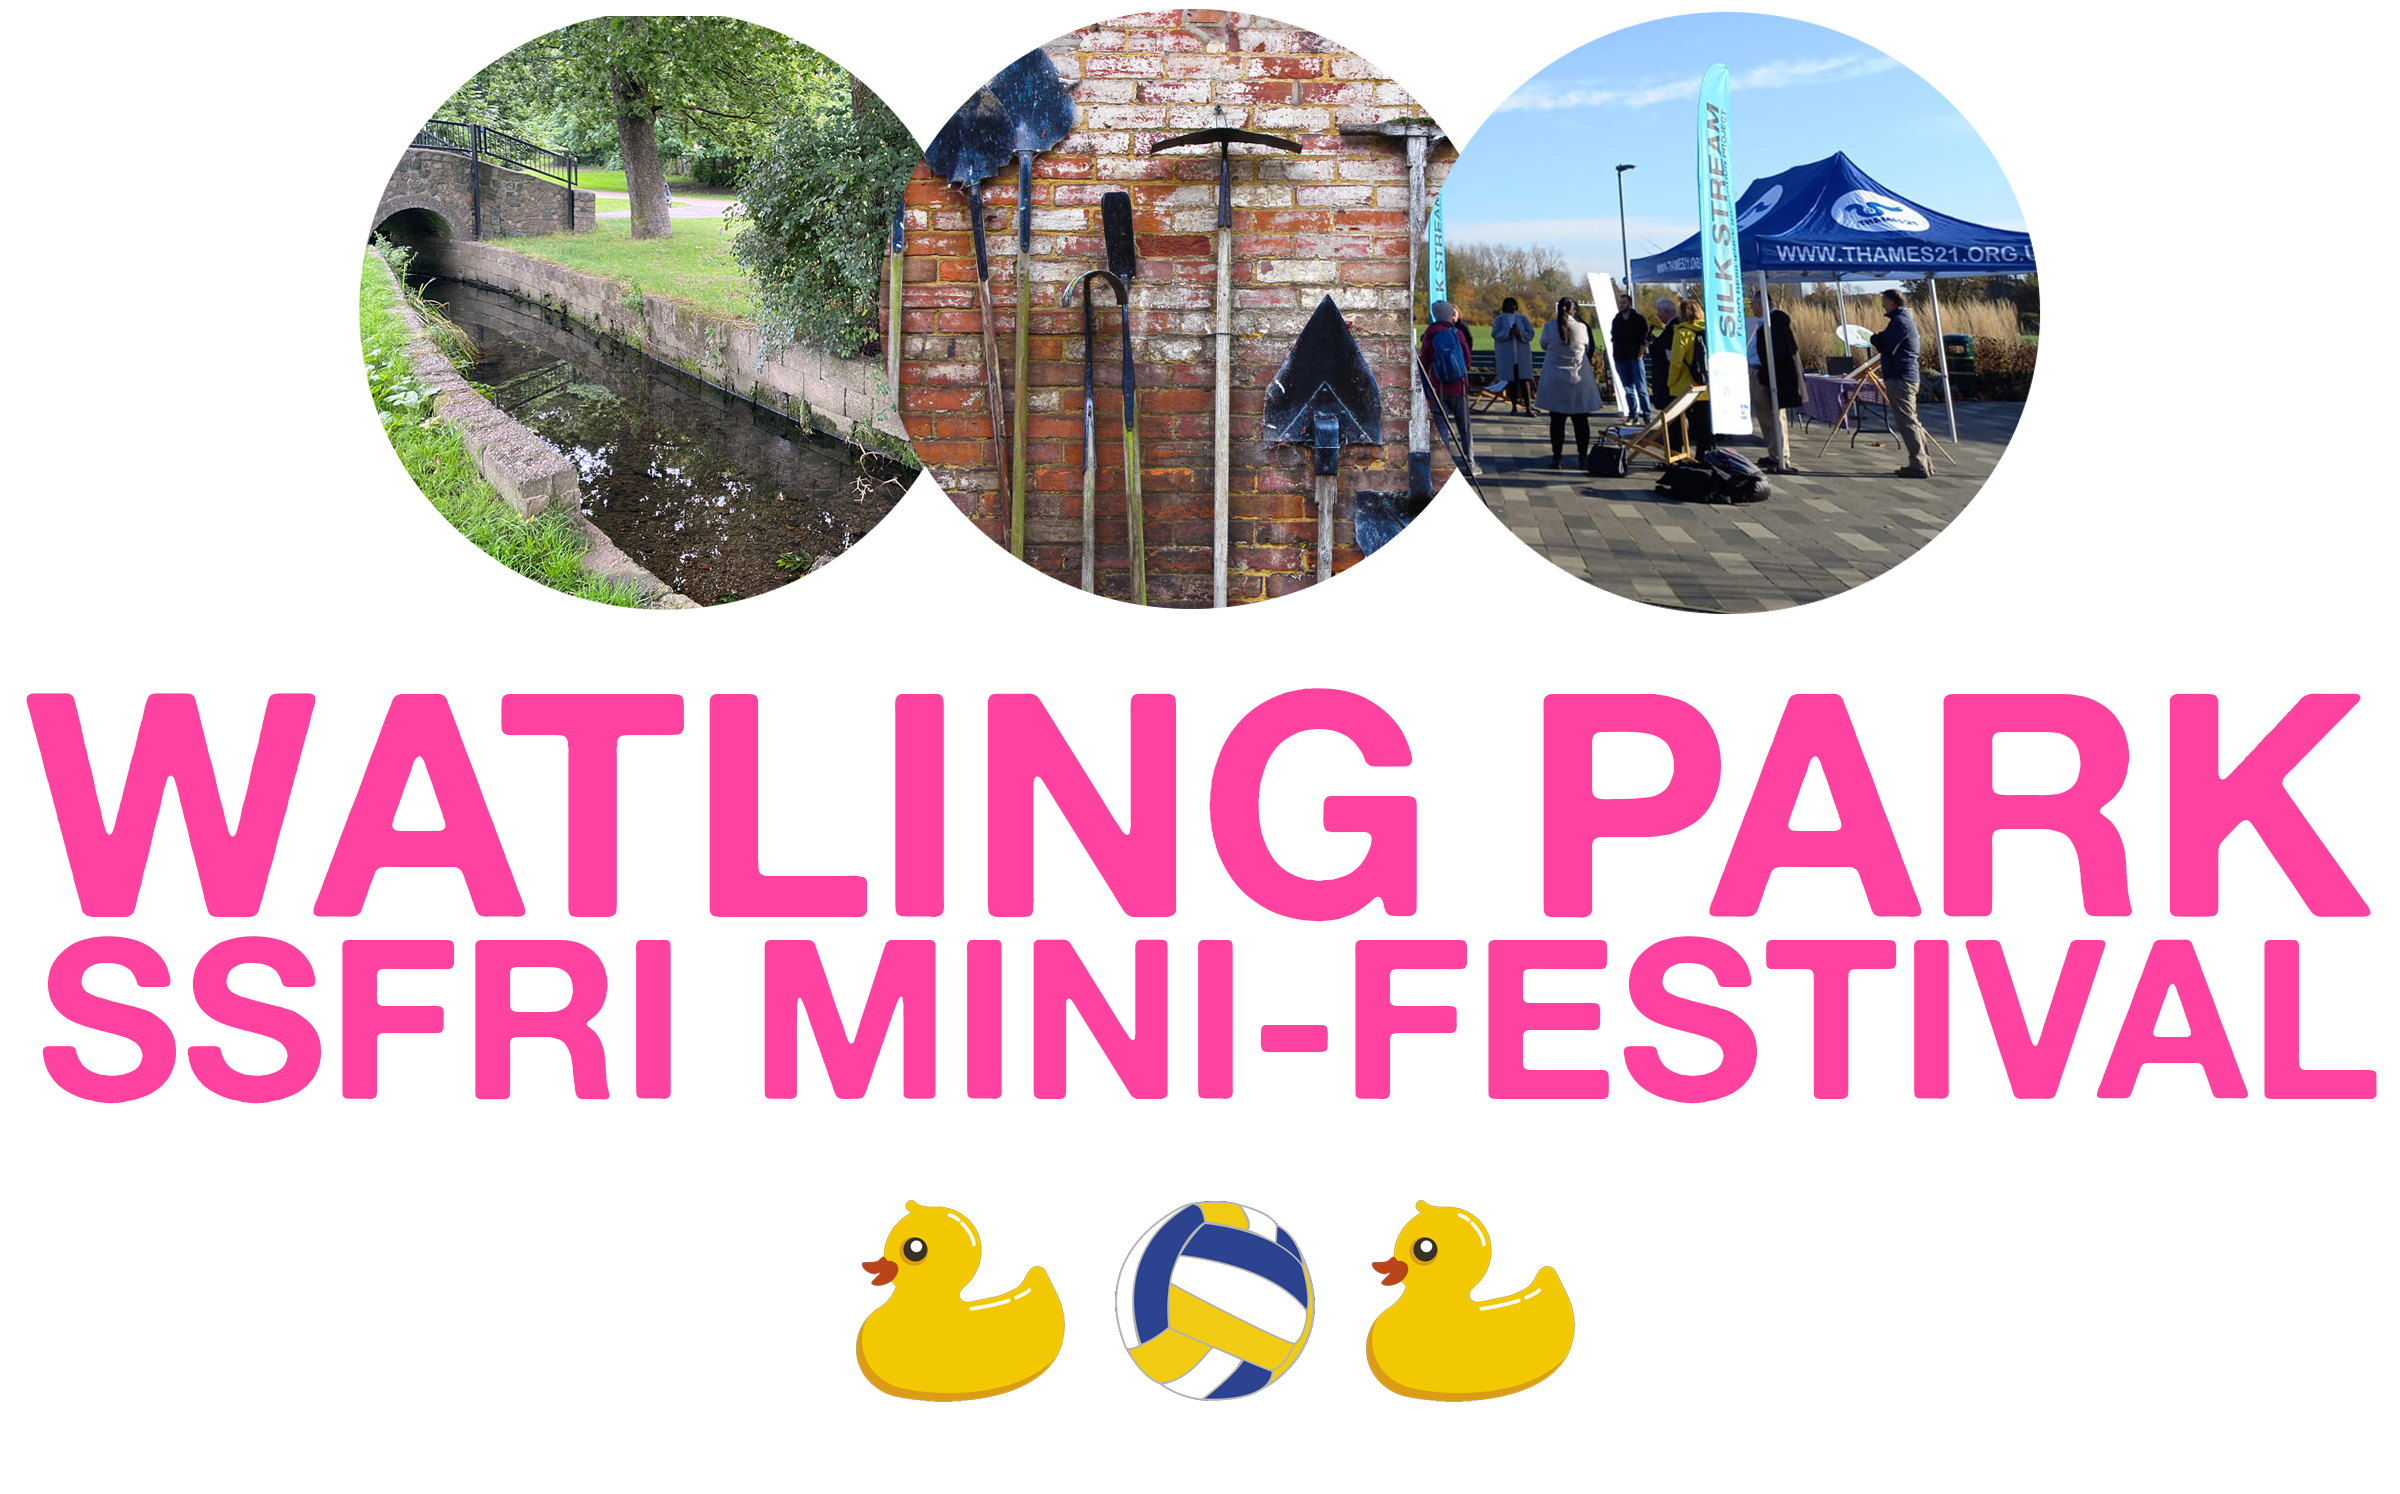 Watling Park SSFRI Mini-Festival